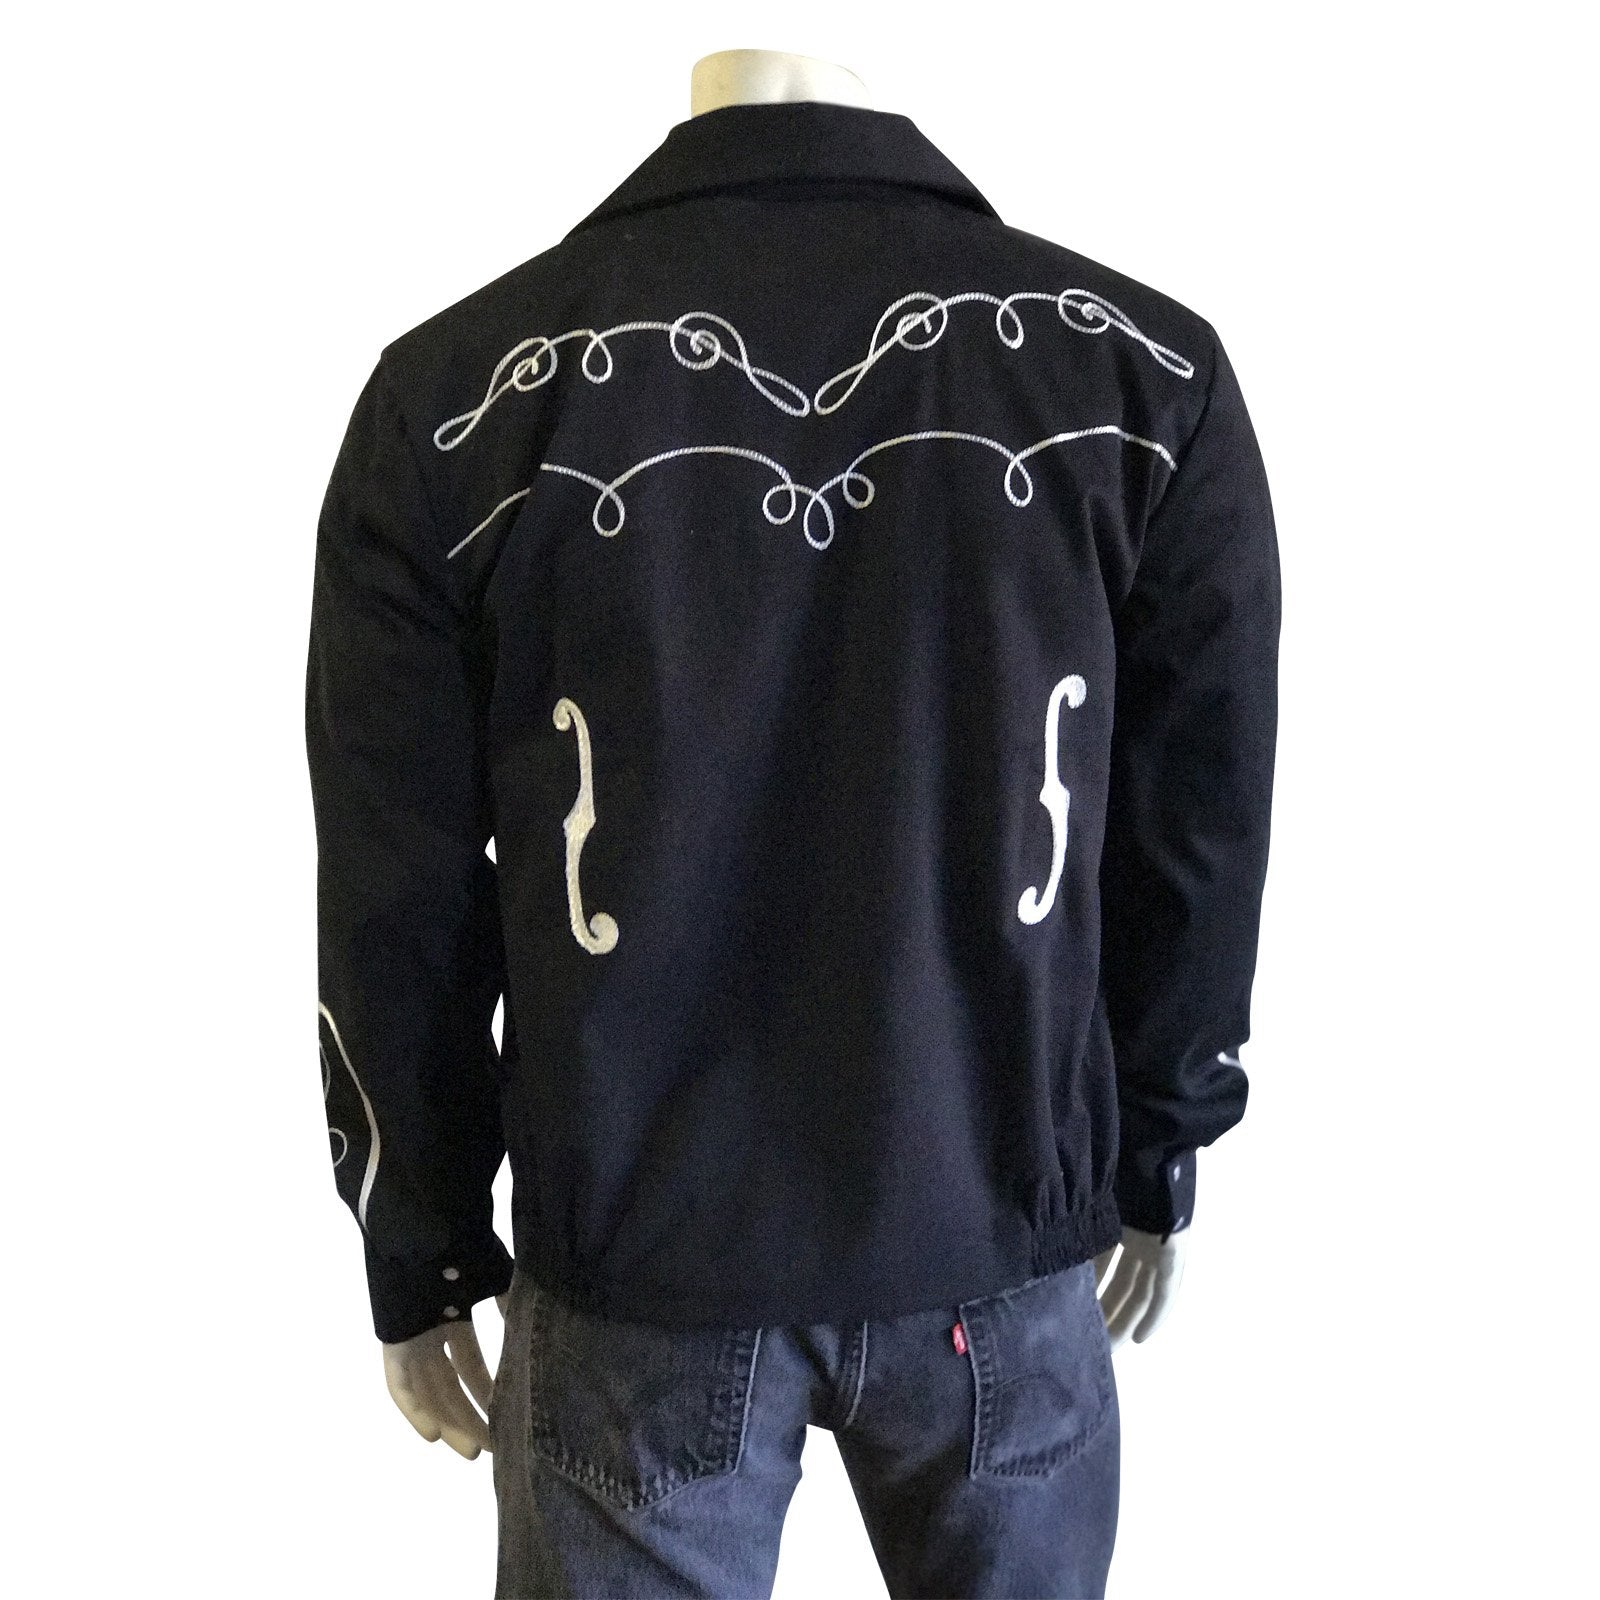 Vintage Inspired Western Jacket Mens Rockmount Ranch Wear Bolero Musical Notes Back Modeled